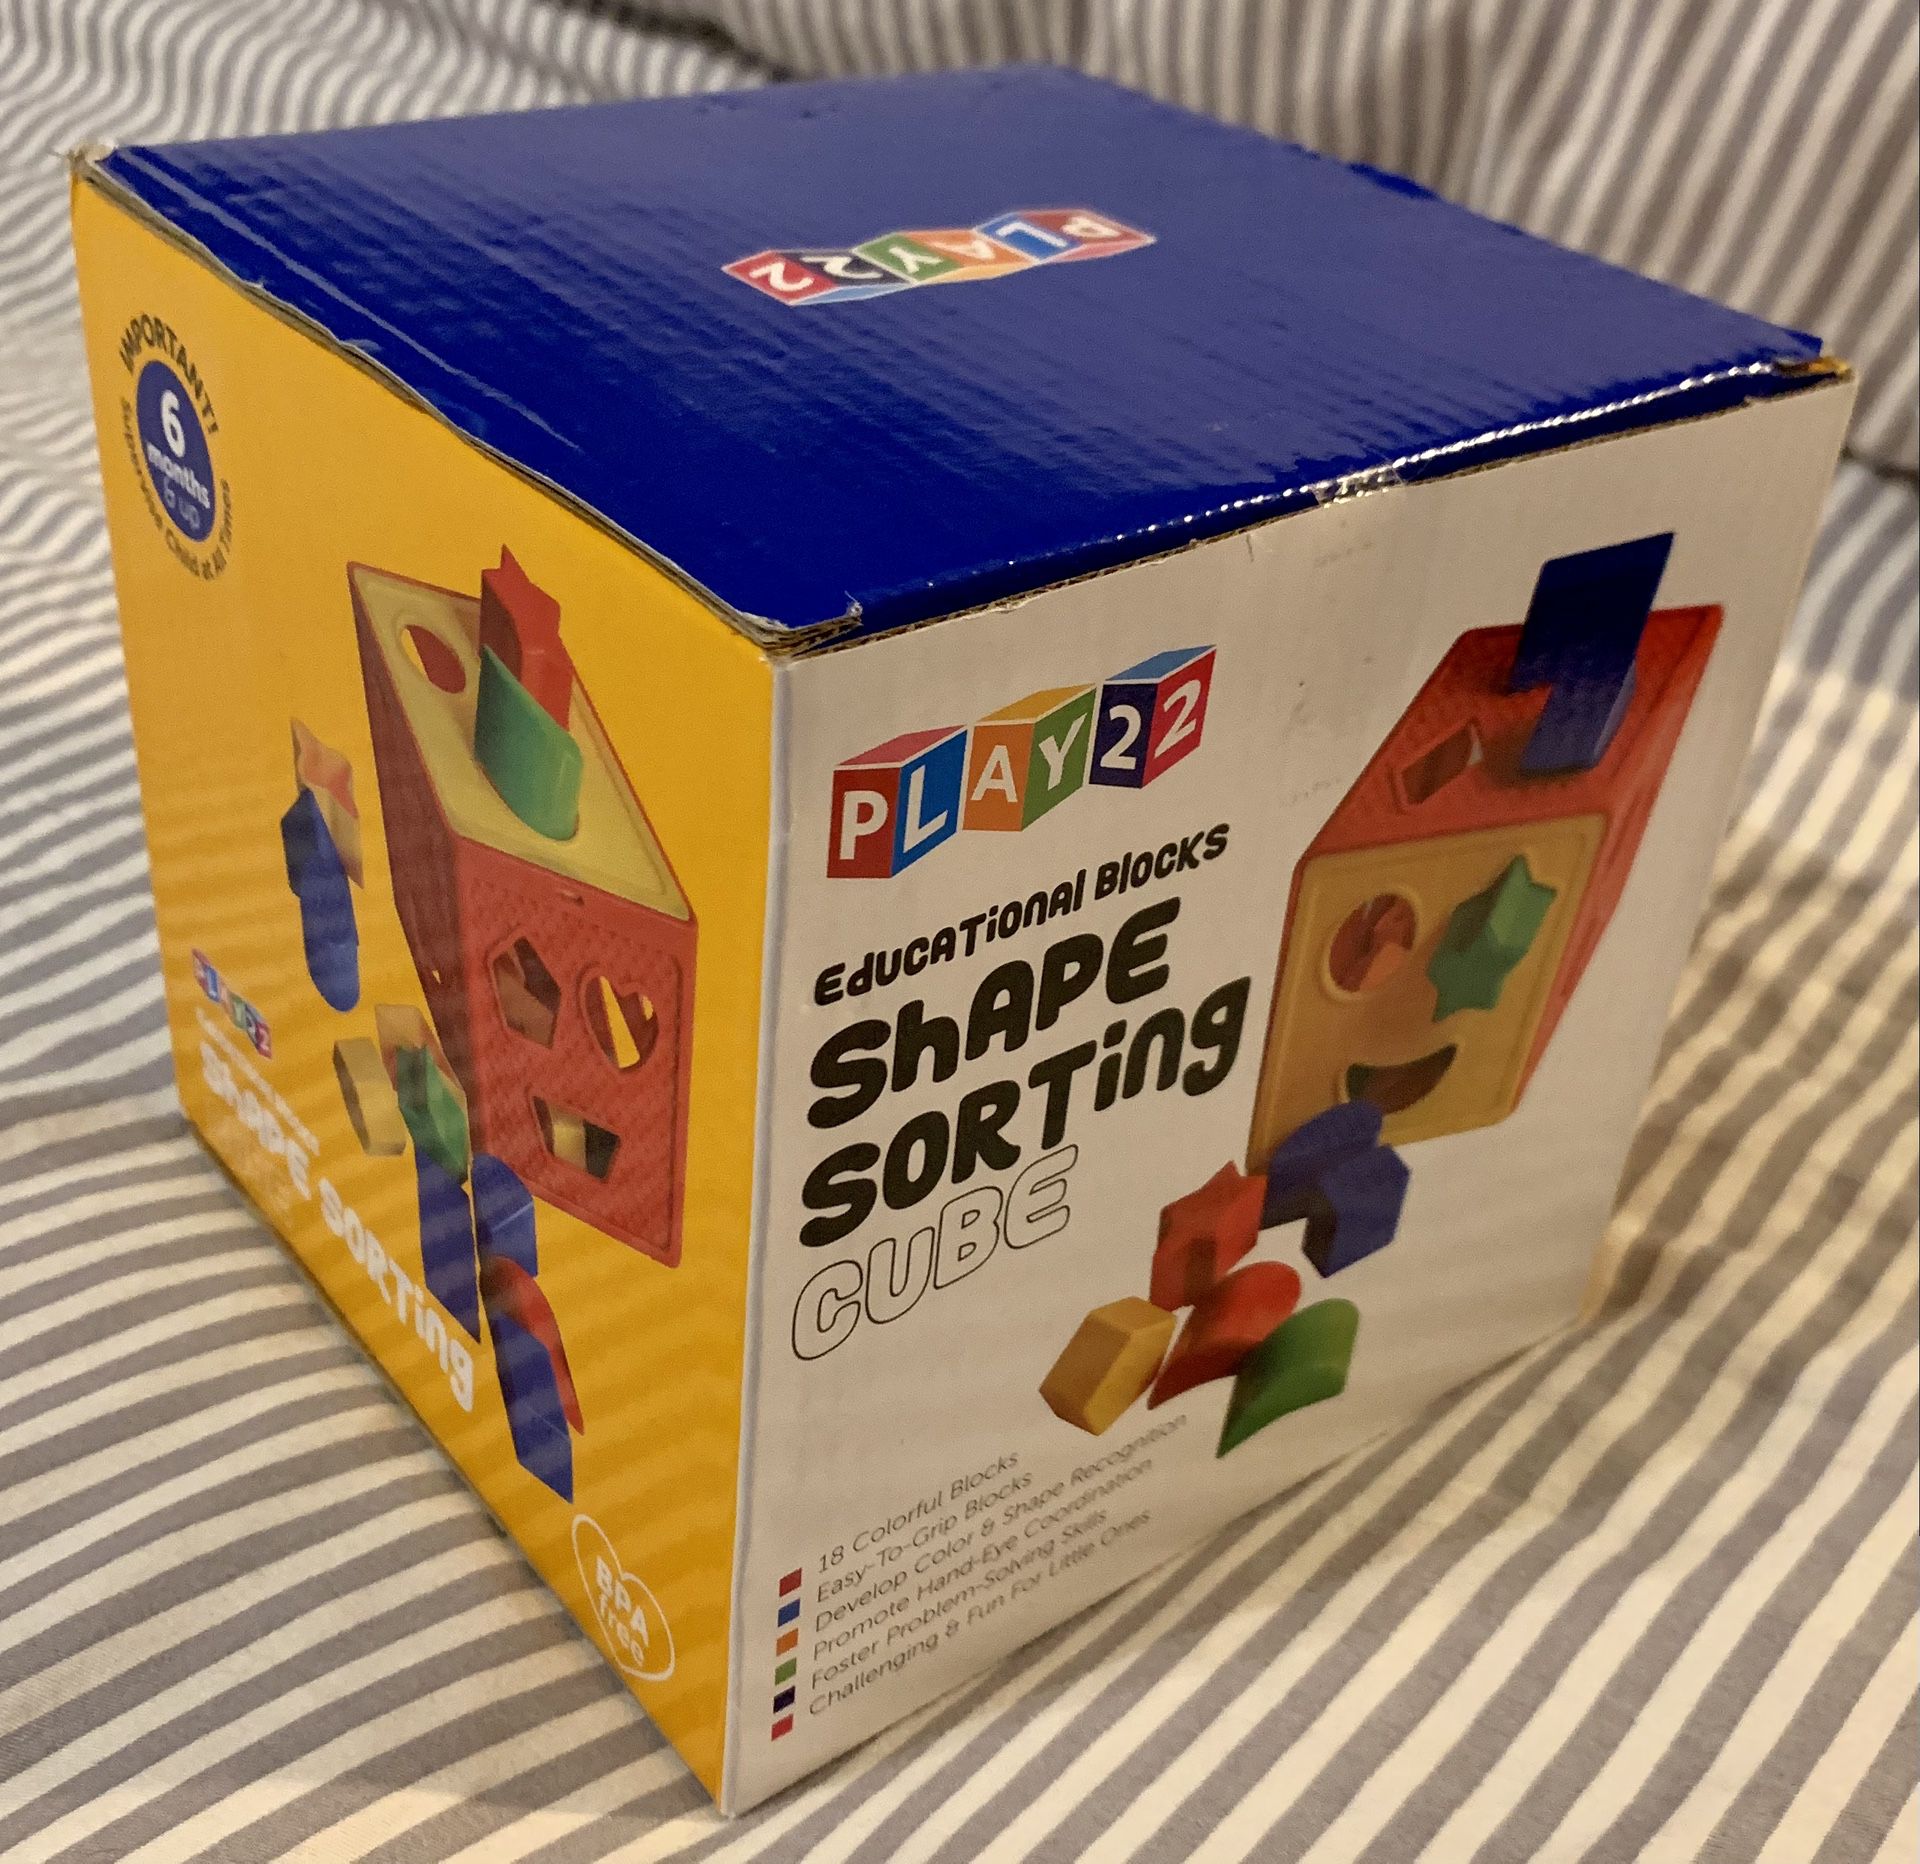 Shape Sorting Cube - $10